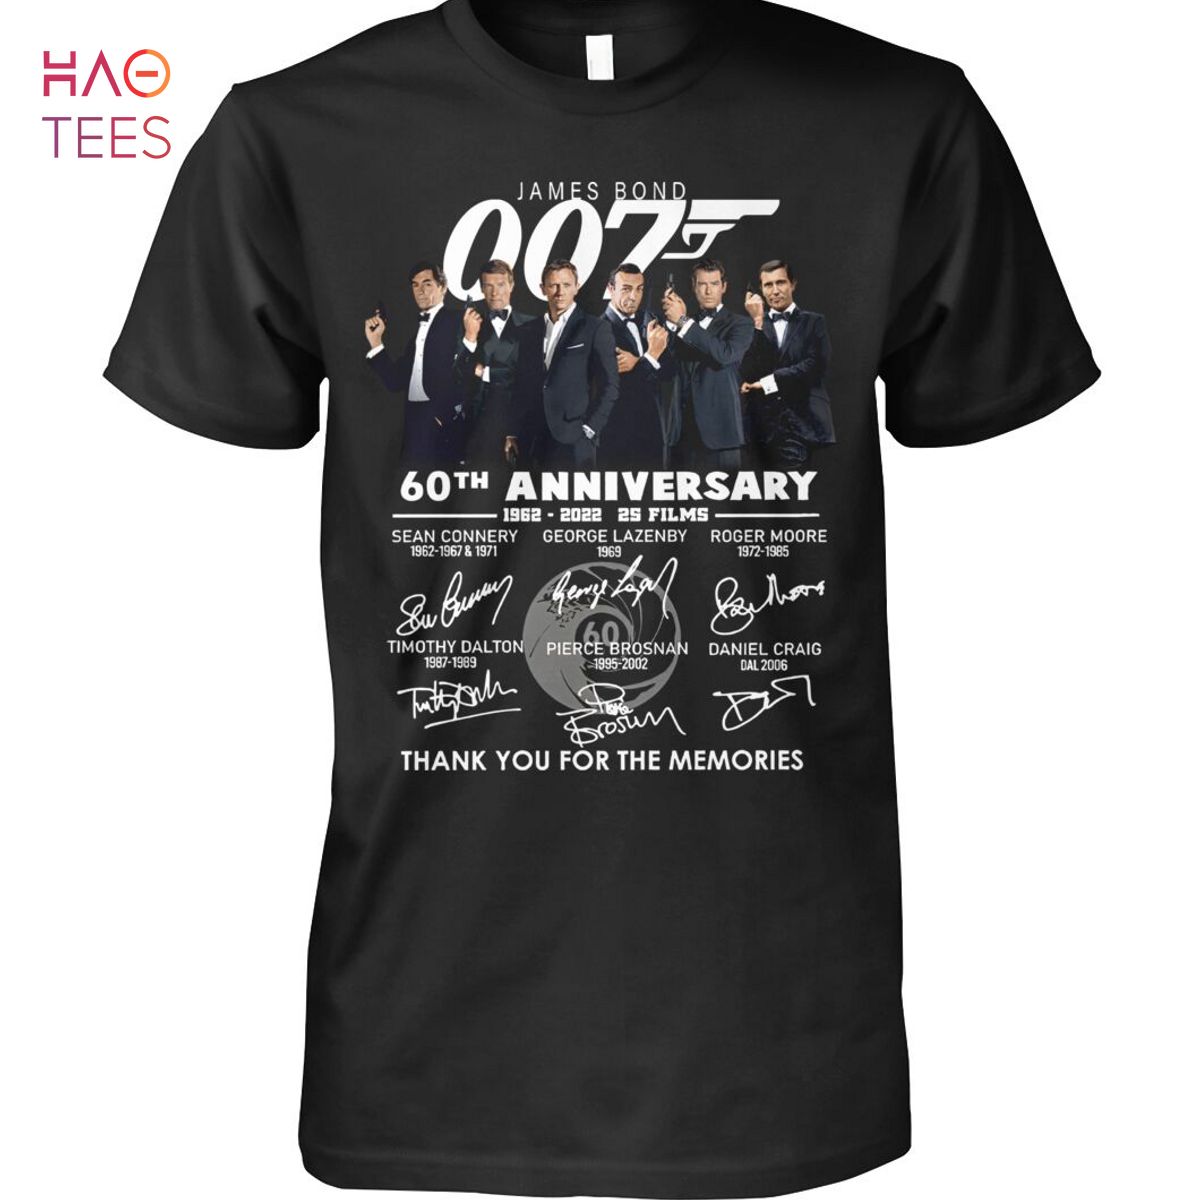 James Bond 60th Anniversary 1962-2022 2S Films Shirt